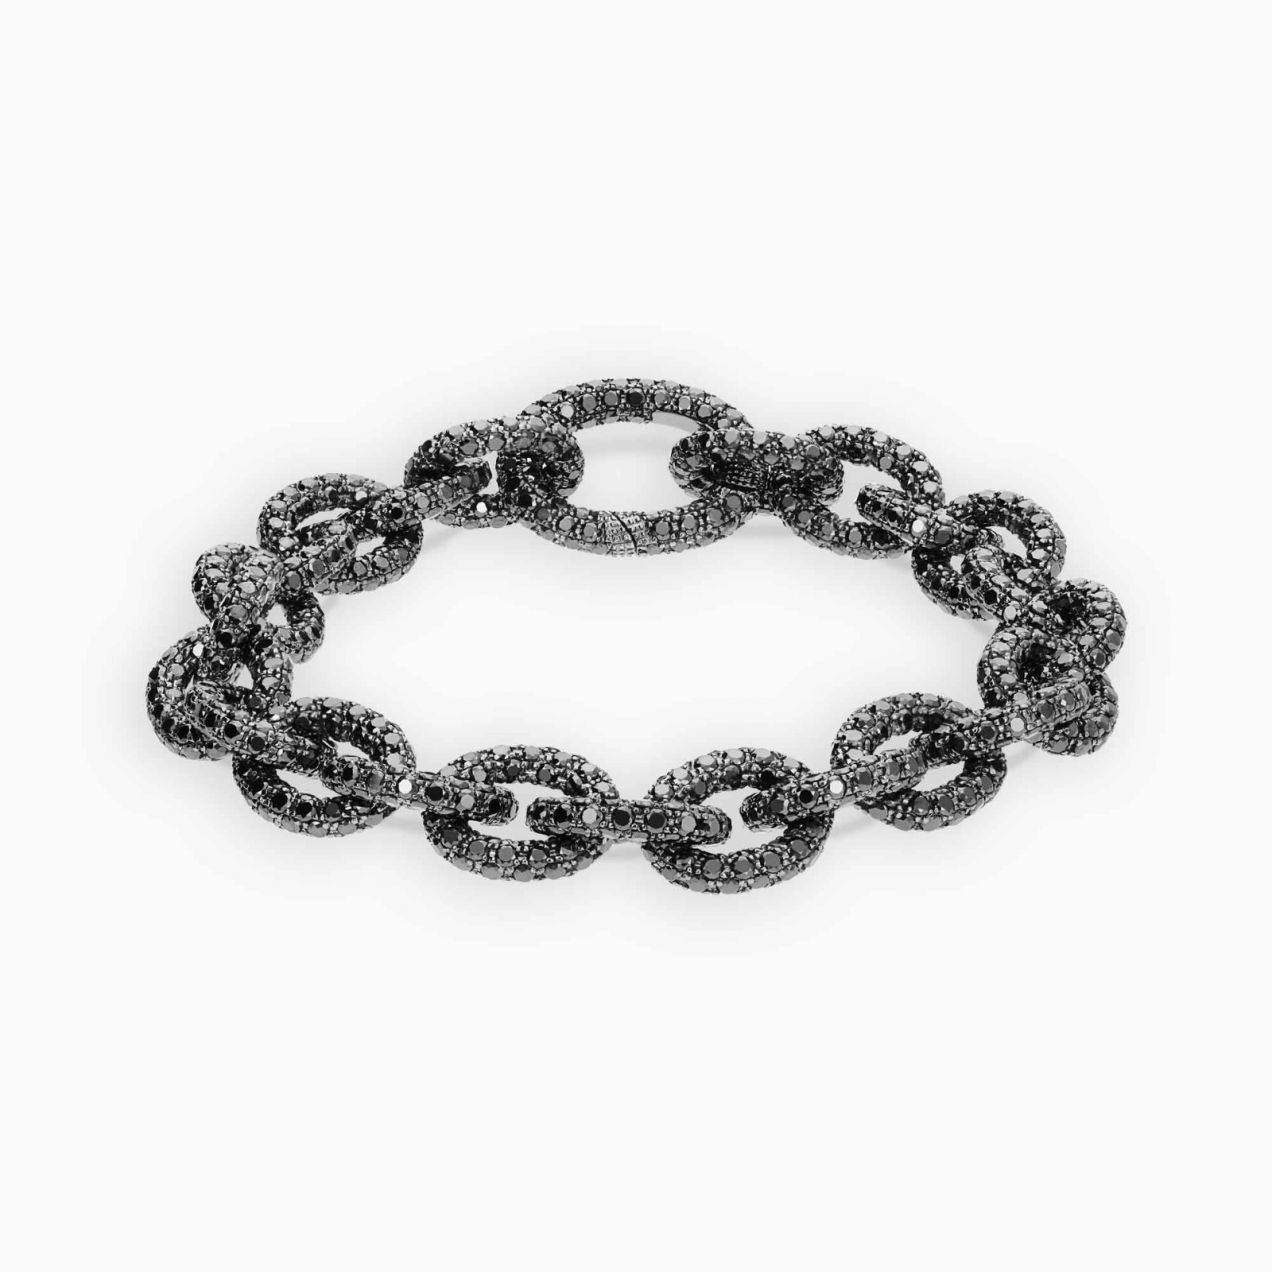 Black rhodium plated gold link bracelet with black diamonds